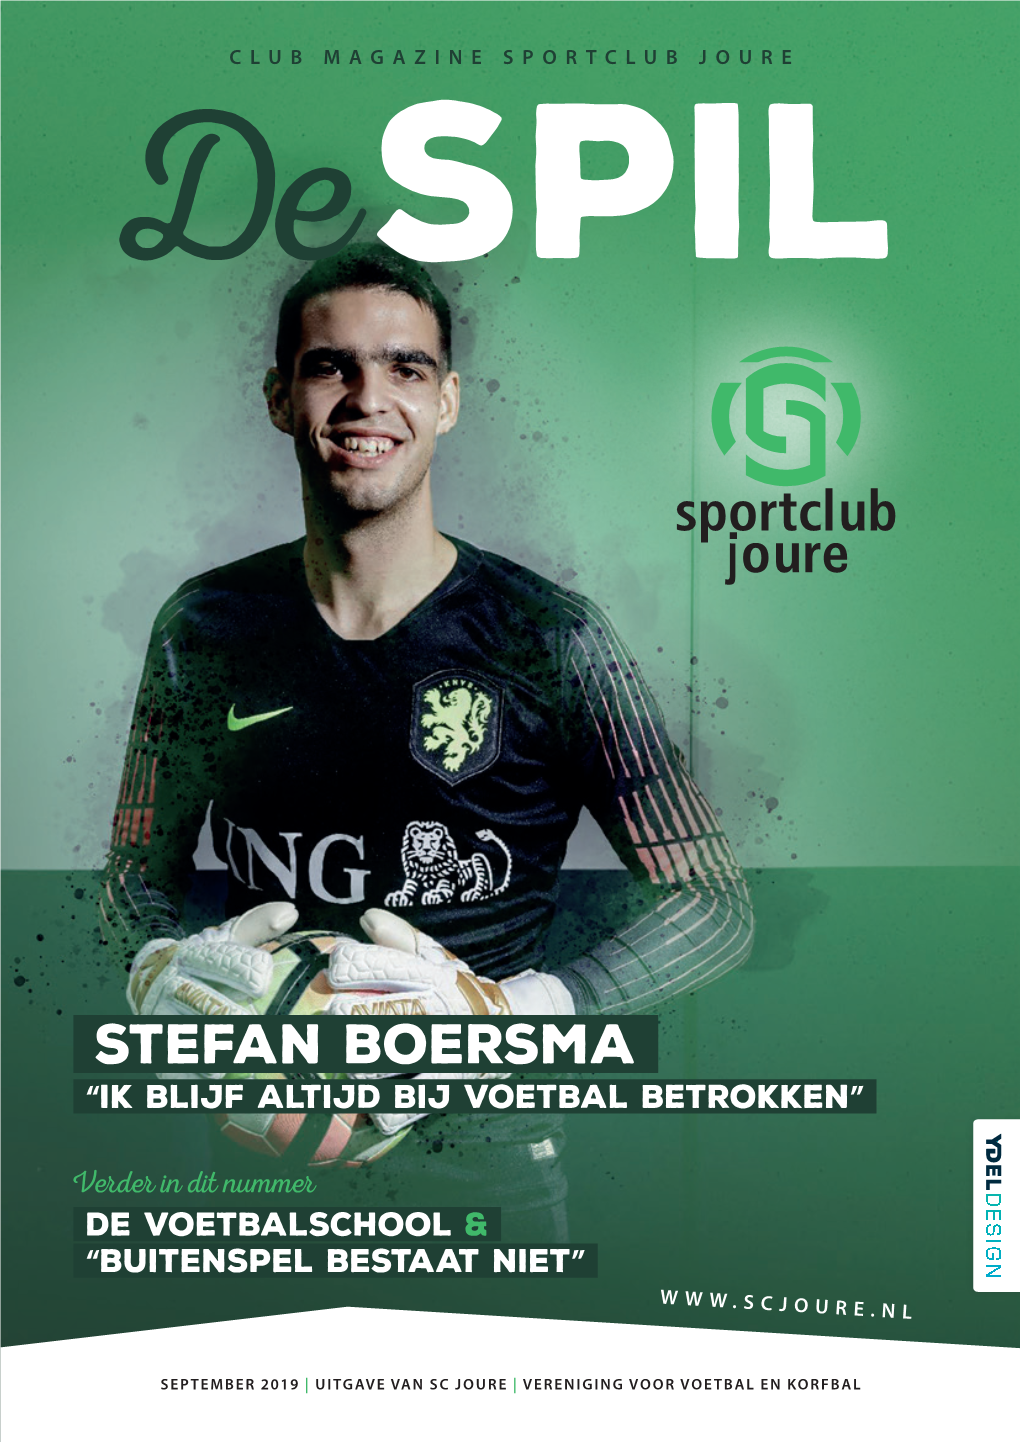 Stefan Boersma “Ik Blijf Altijd Bij Voetbal Betrokken”